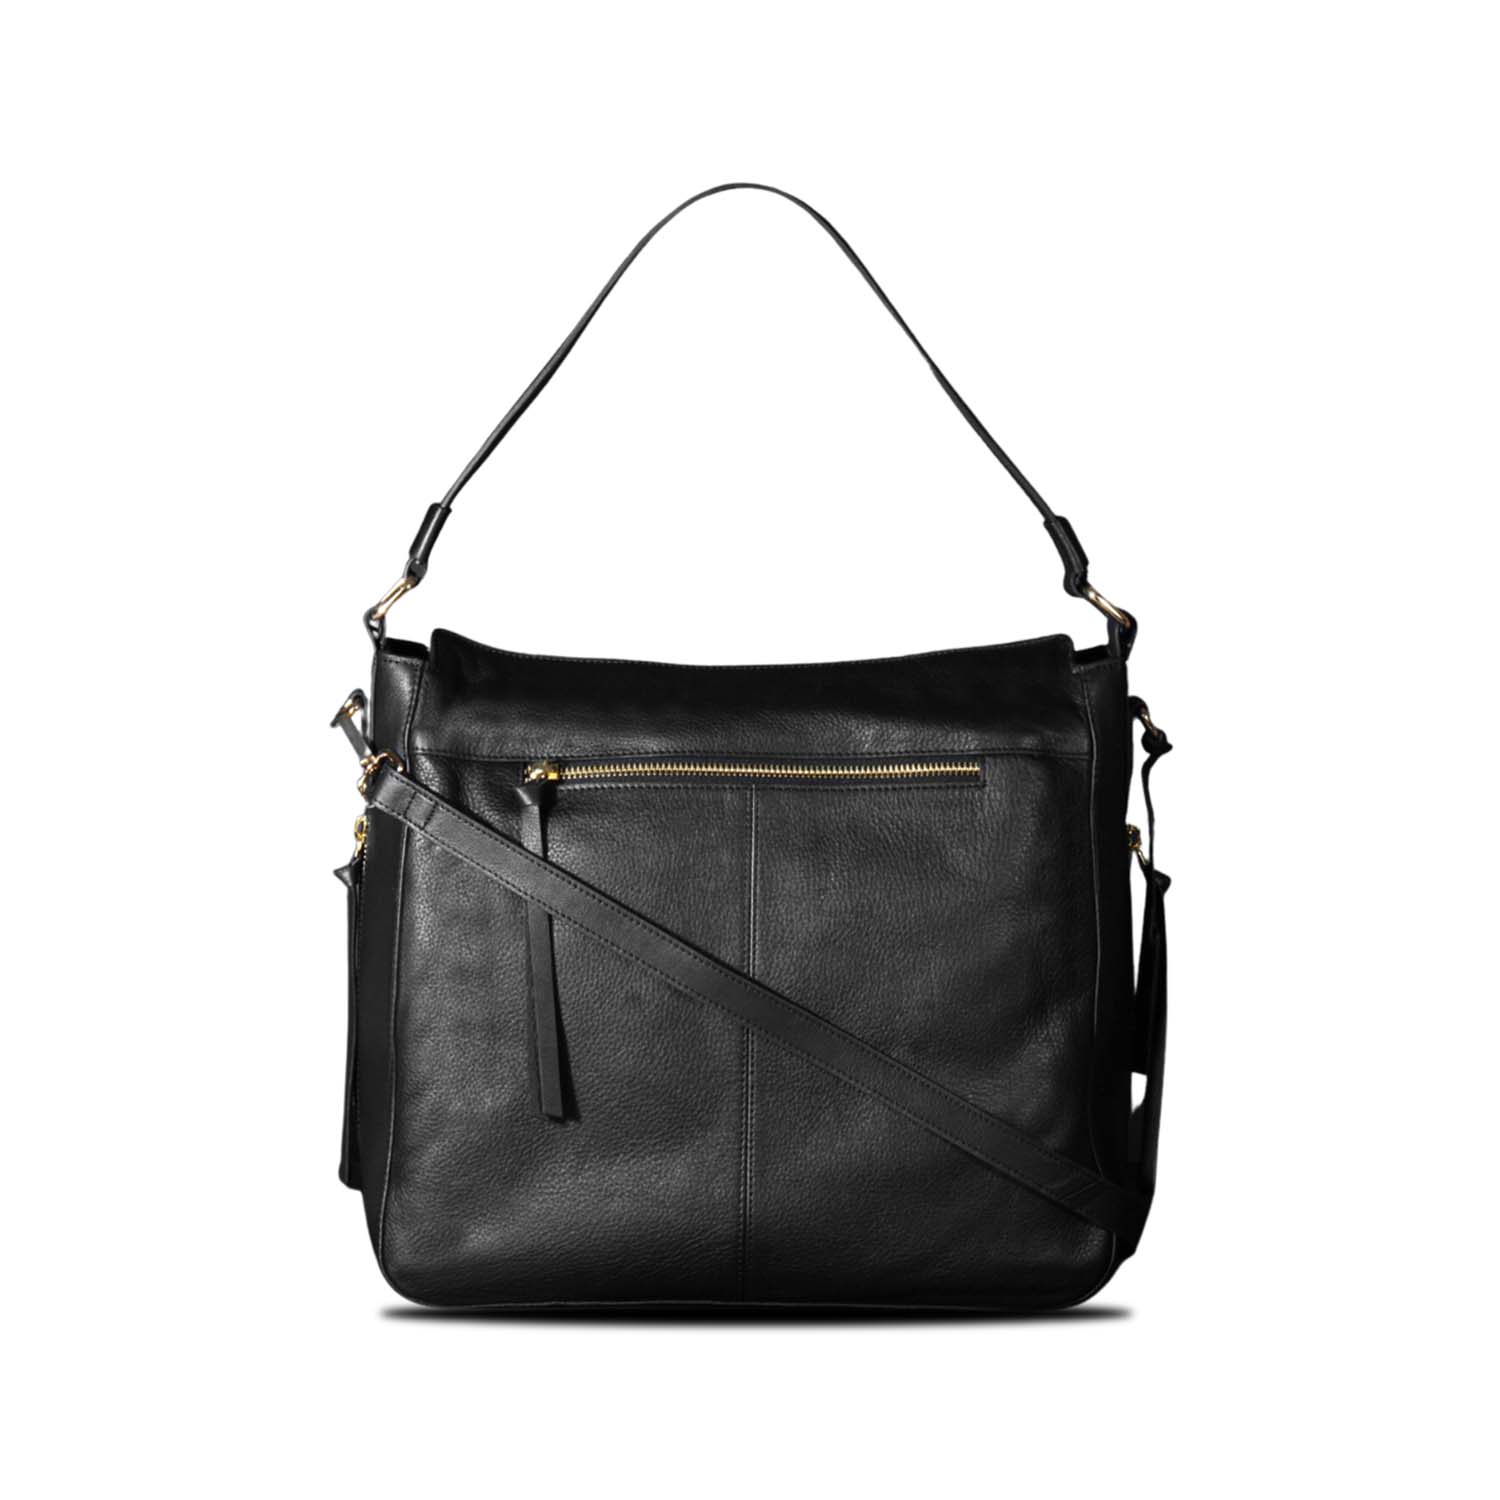 Ivanna - The Handbag/Sling Bag -  Black - Tortoise  